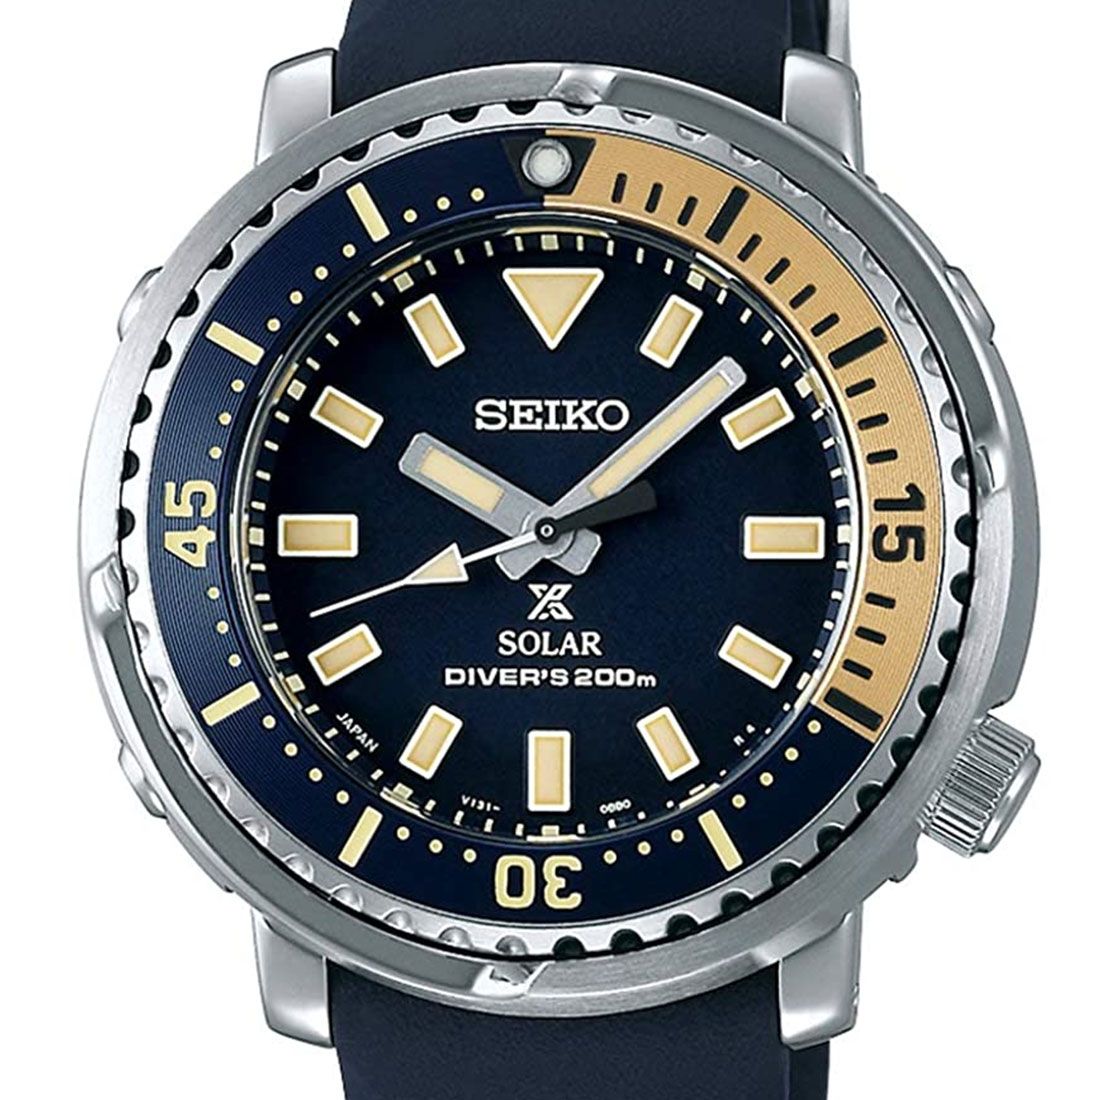 Seiko Prospex Street Safari Divers Blue Dial JDM Japan Watch STBQ003 -Seiko